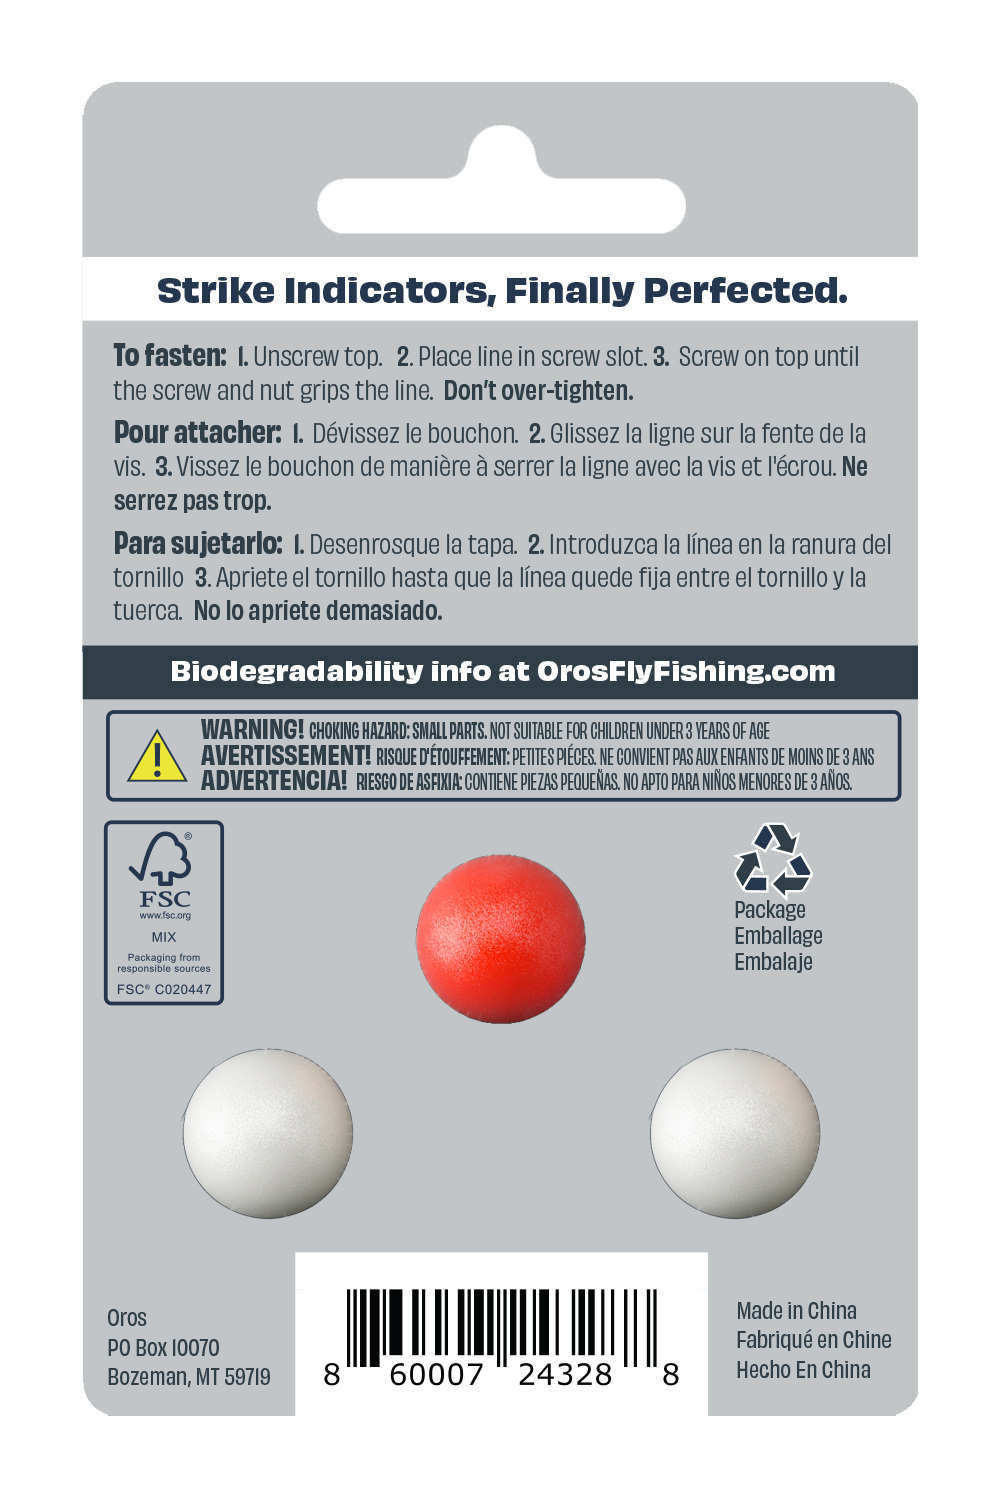 Oros Strike Indicator 3 on card – NFD